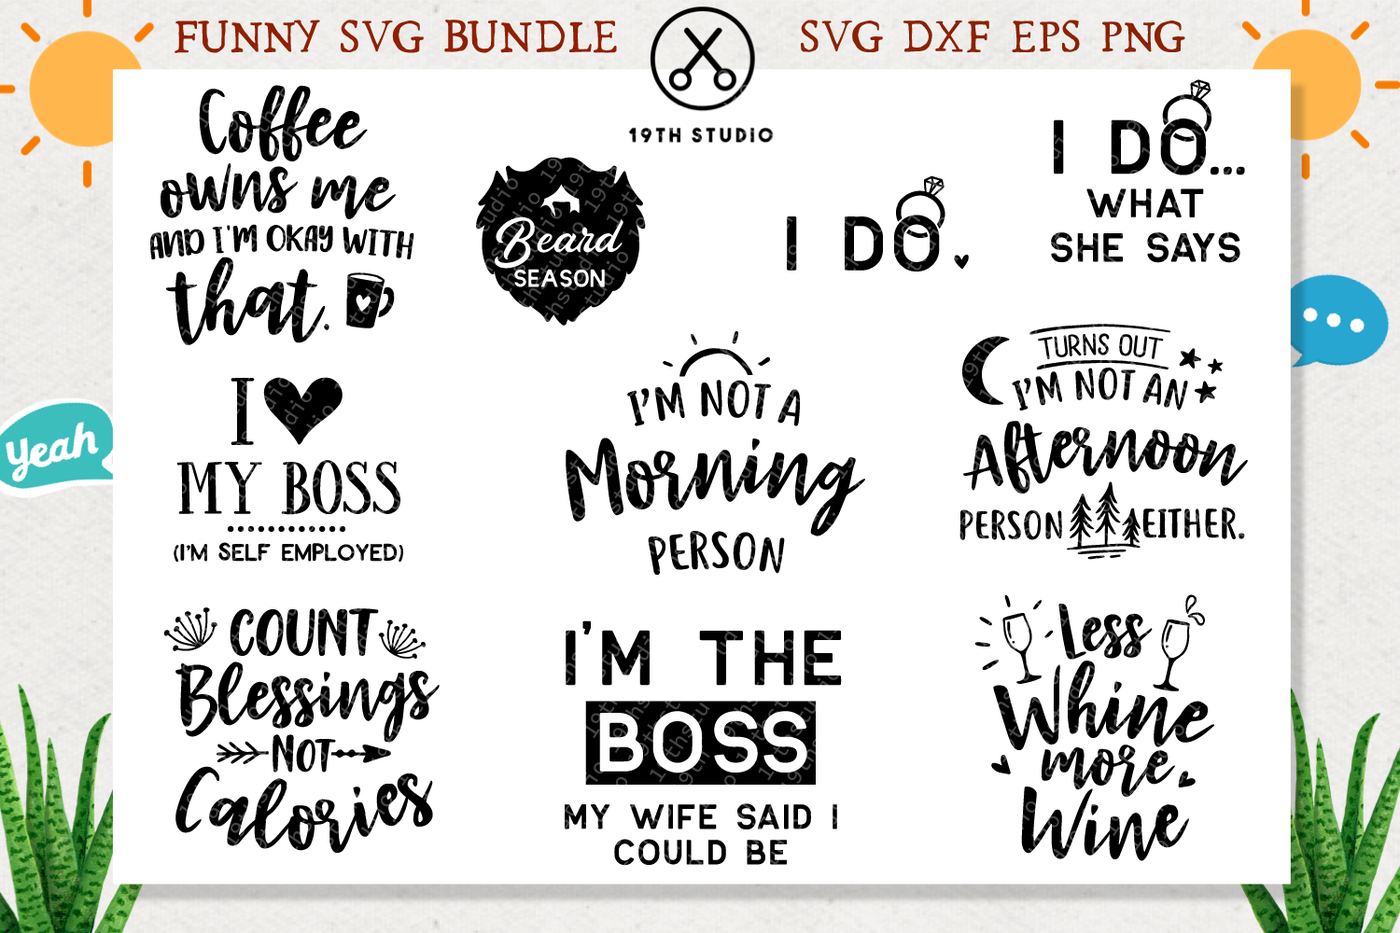 Funny SVG bundle - SVG DXF EPS PNG | M4 By 19TH STUDIO | TheHungryJPEG.com